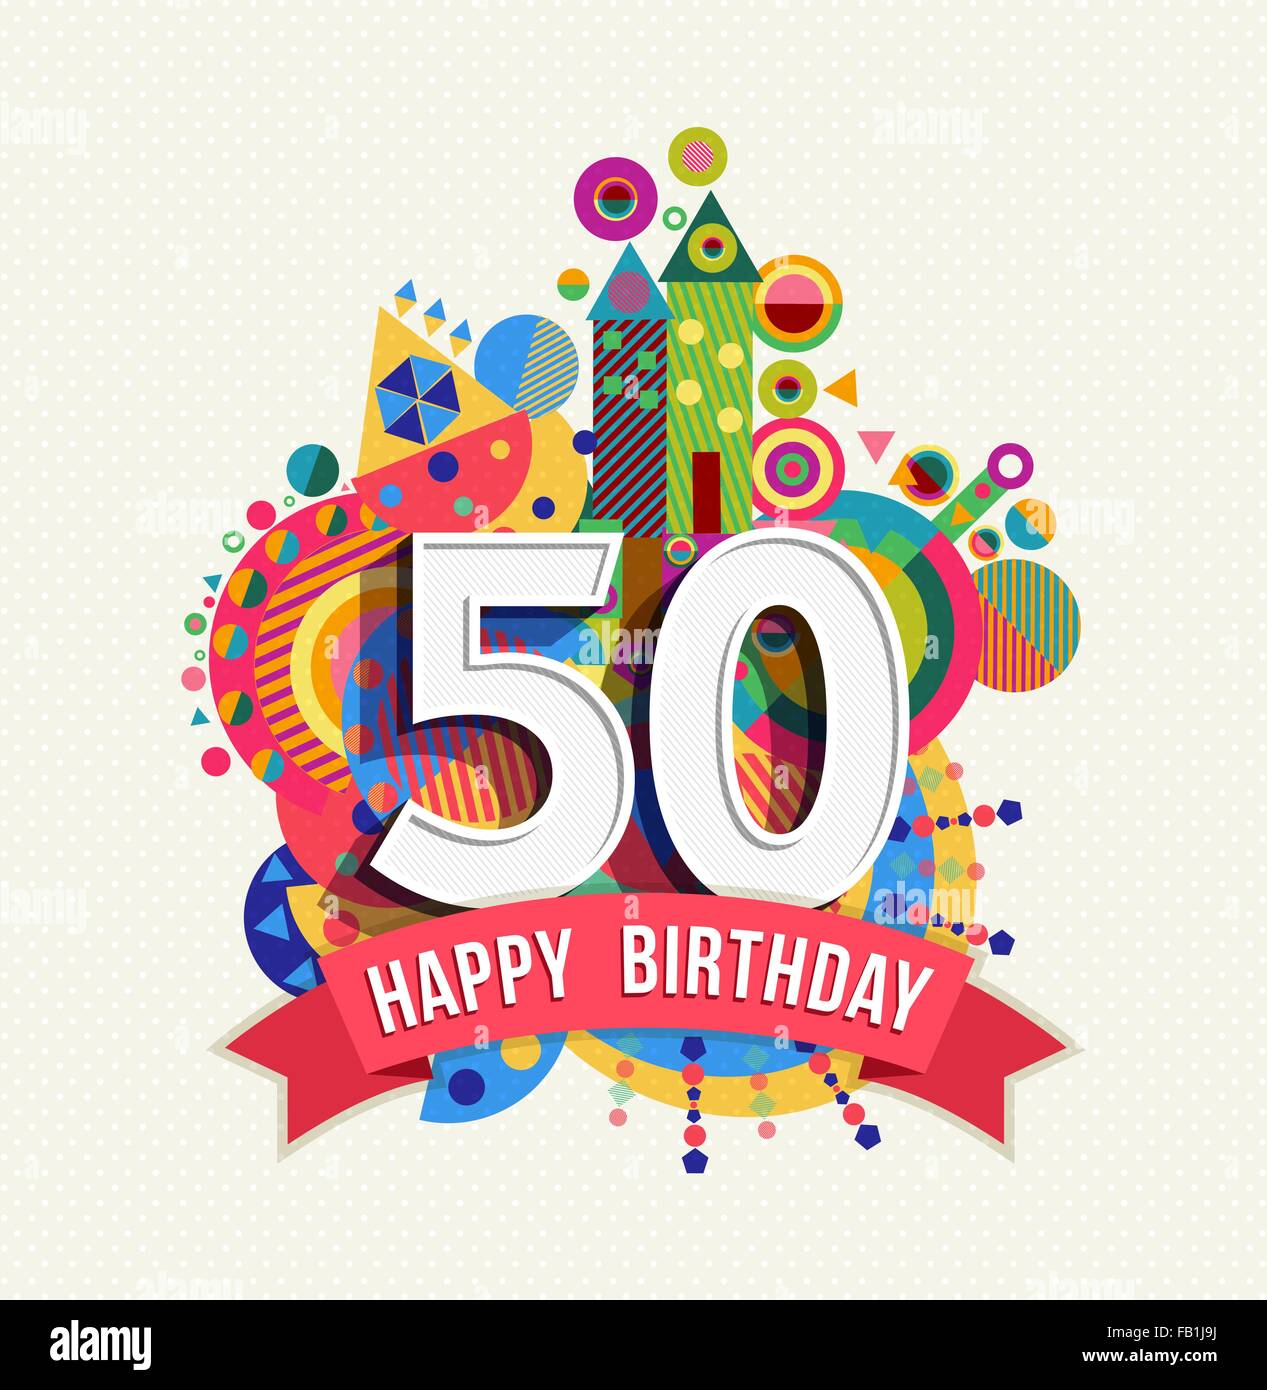 50 aniversario quincuagésimo aniversario fotografías e imágenes de alta  resolución - Alamy